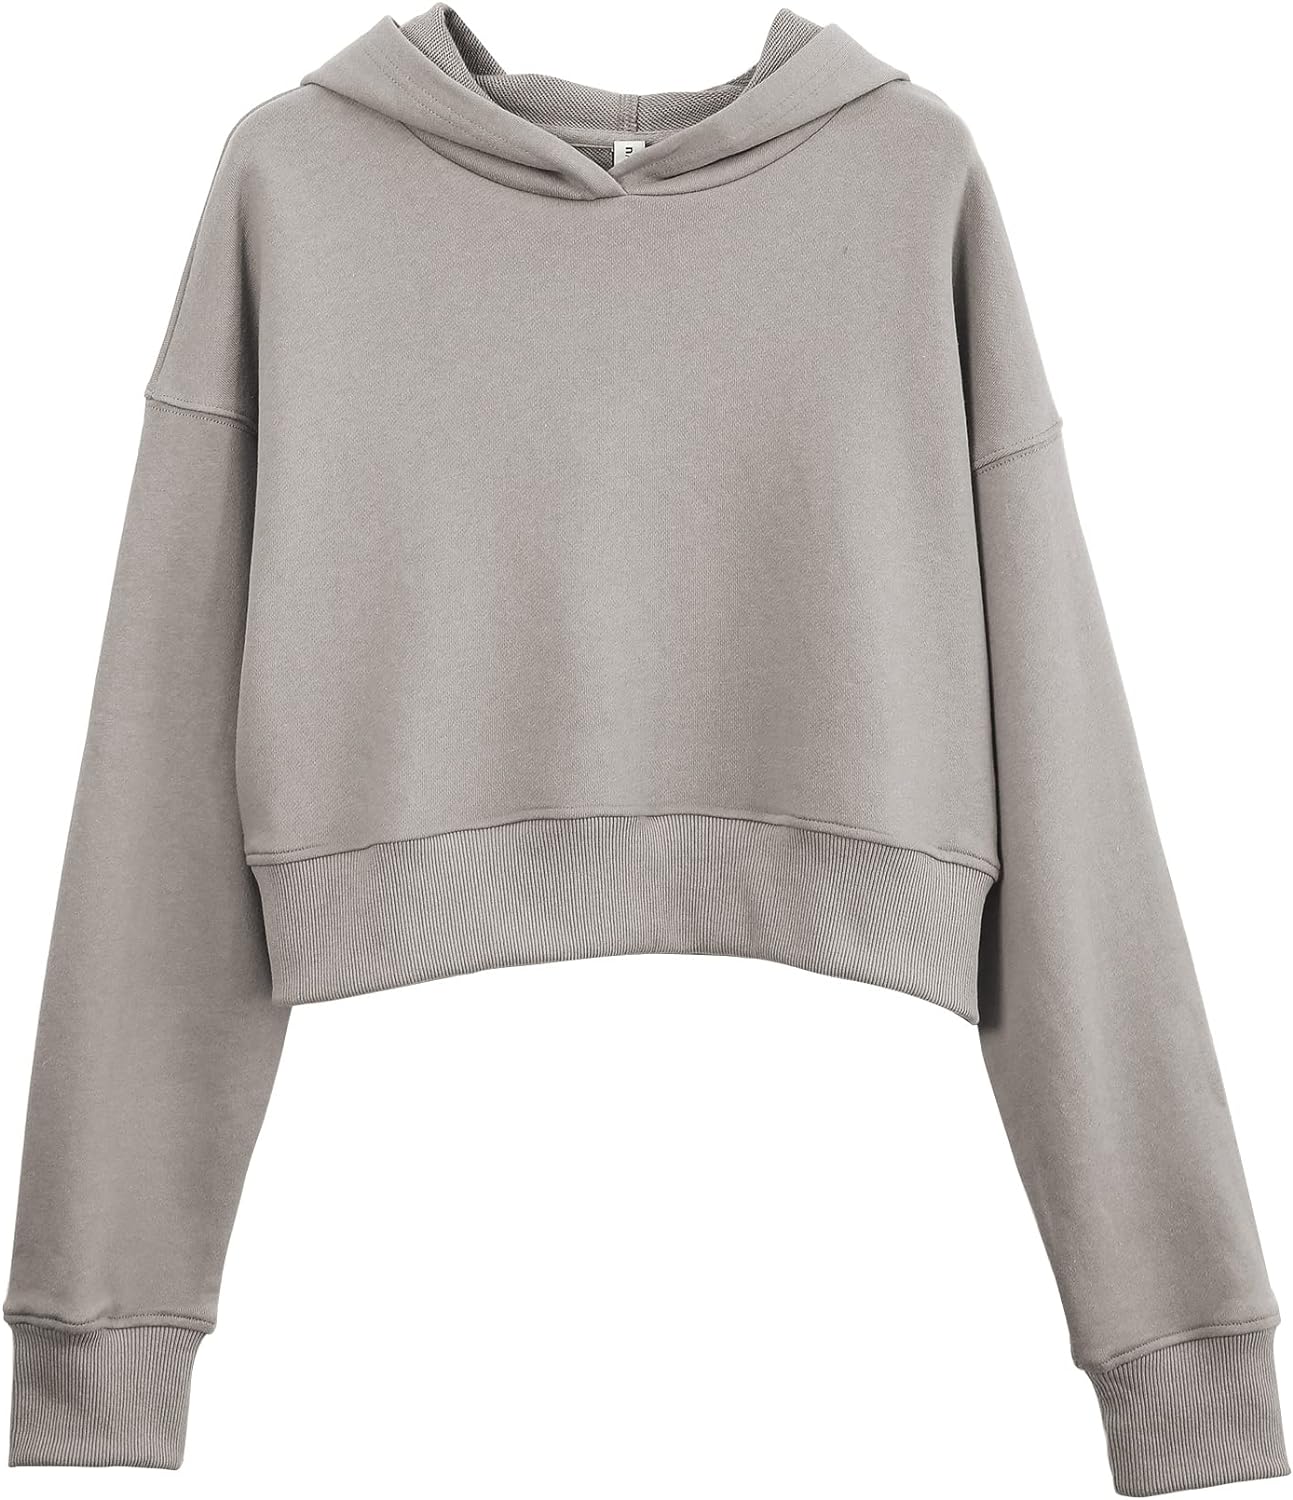 NTG Fad Gray / Medium Amazhiyu Women’s Cropped Hoodie with Hood Casual Long Sleeve Crop Top Sweatshirt